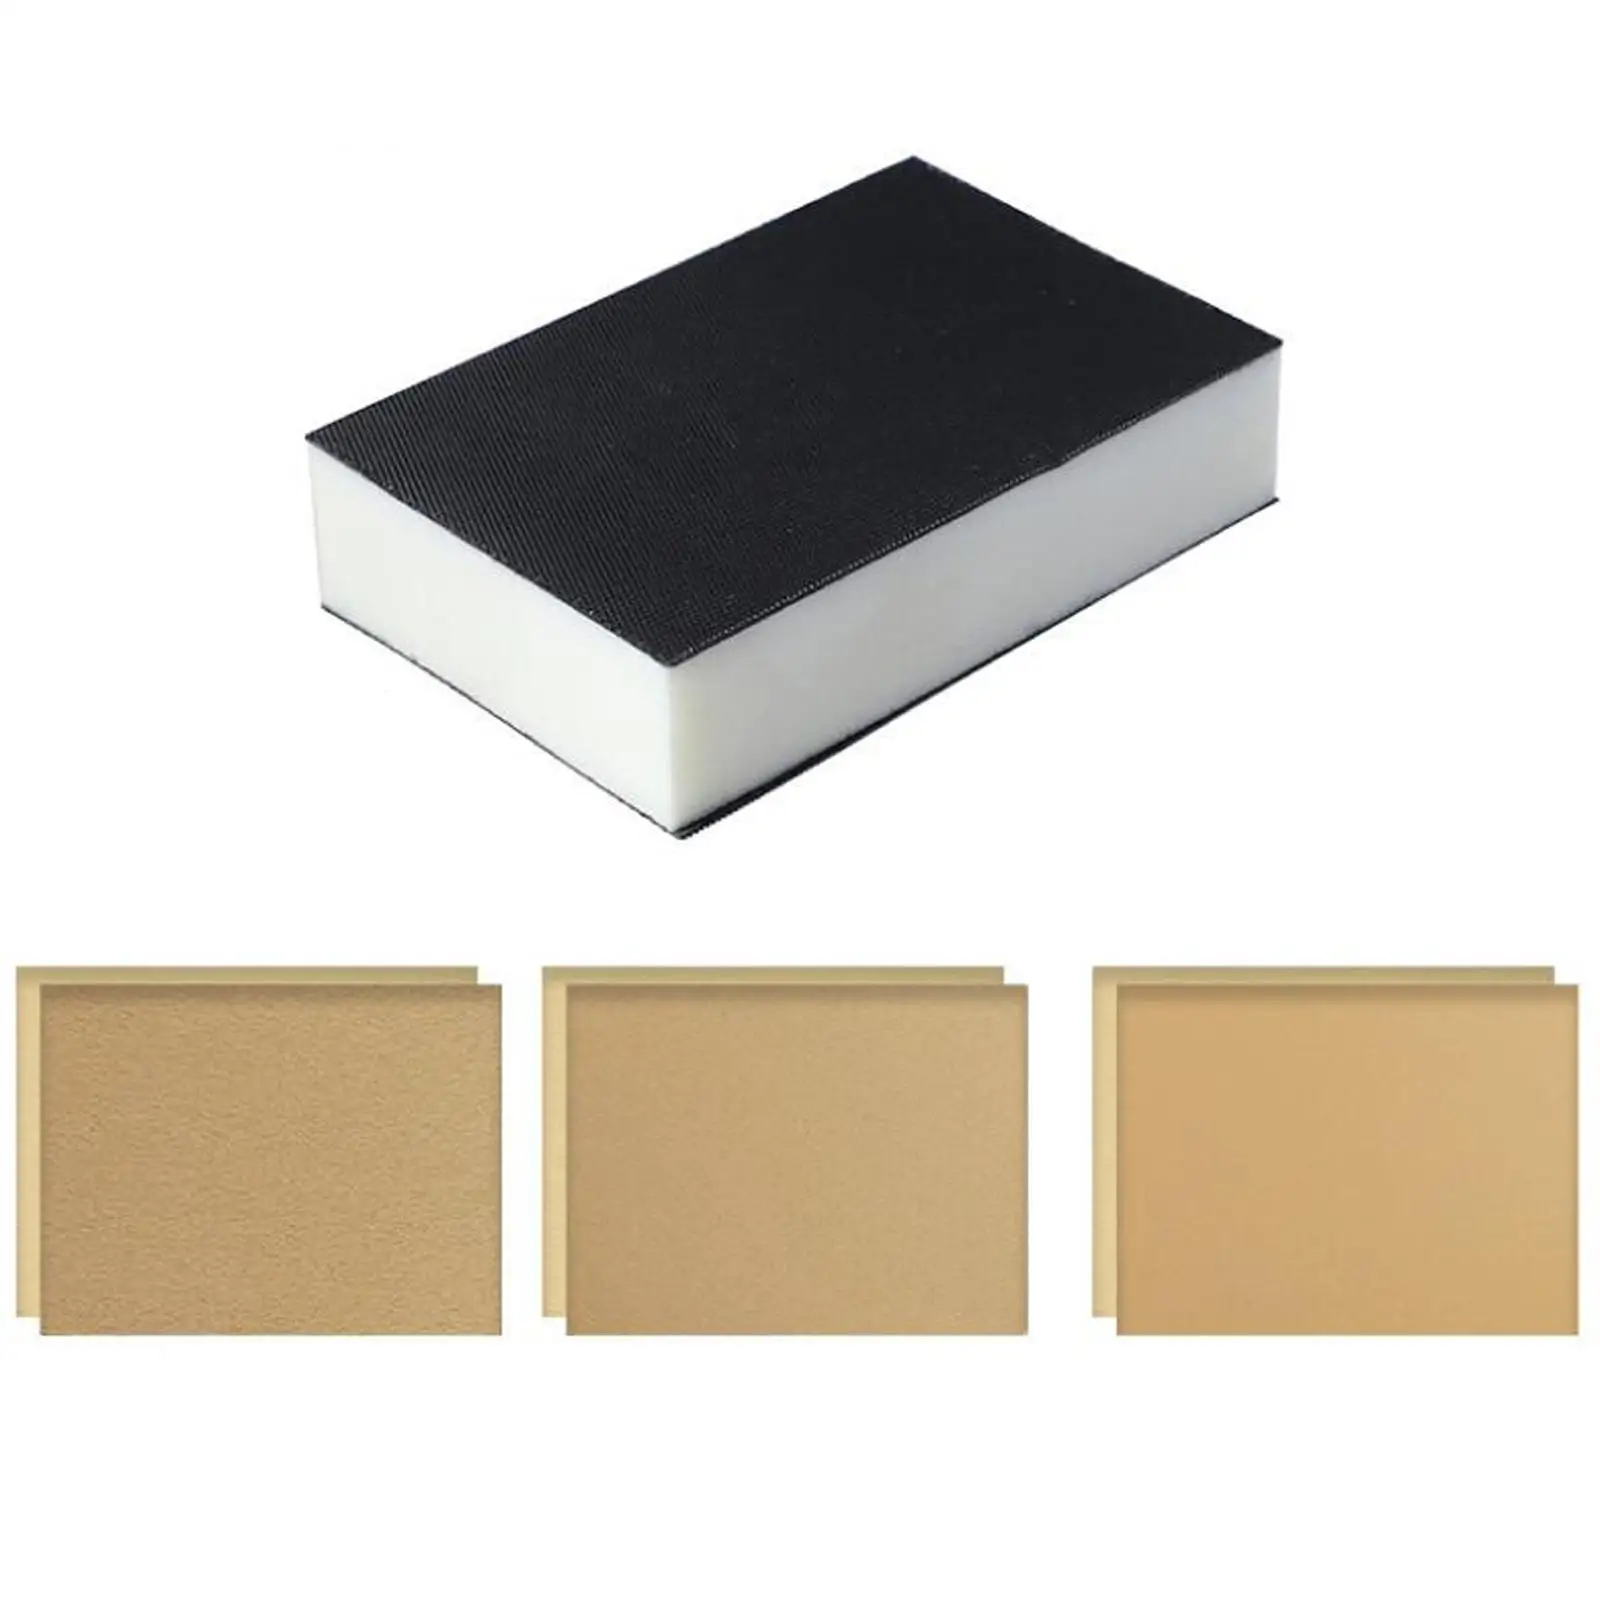 Handheld Sanding Kit Self Adhesive Sanding Disc Polishing Sandpaper Sanding Paper Mini Sander for Small Projects Metals Polish